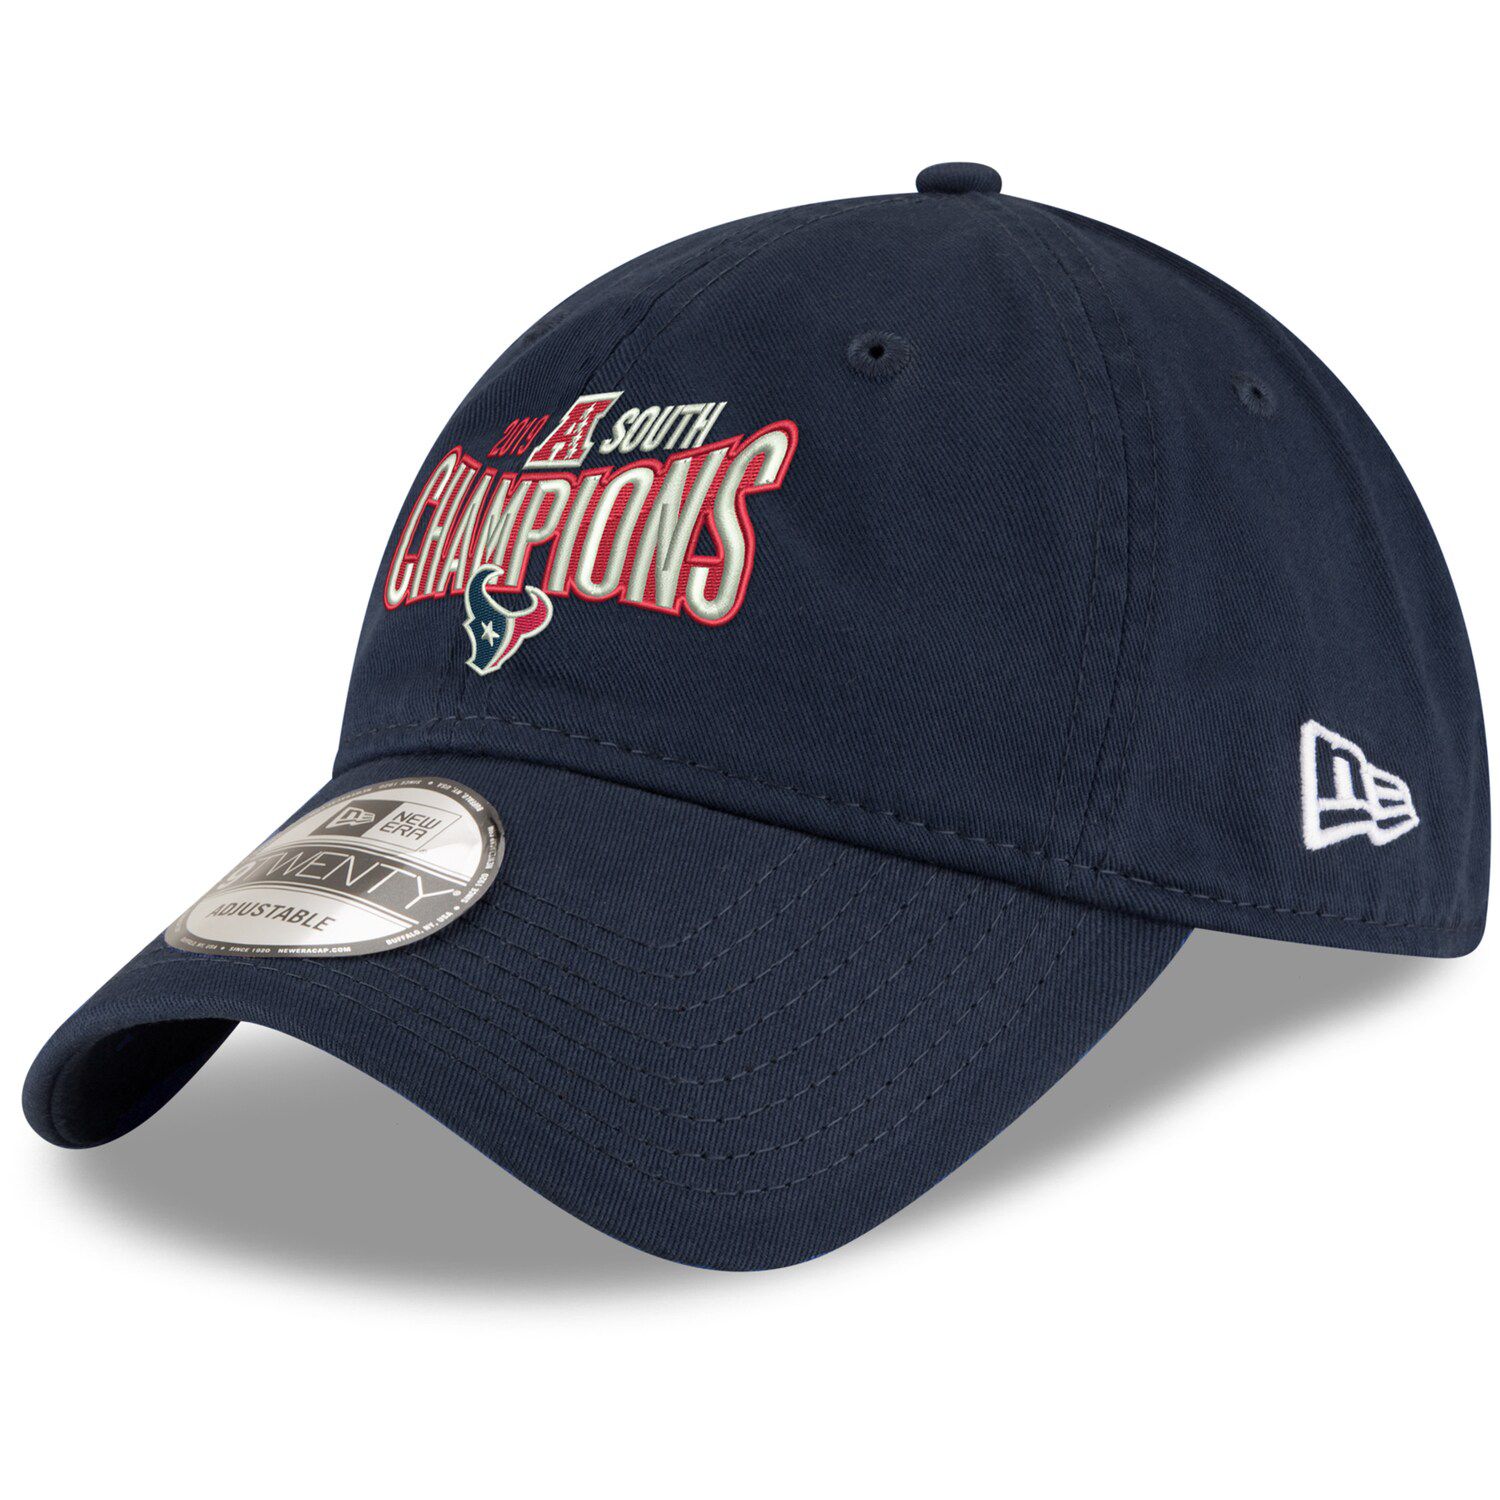 texans championship hat